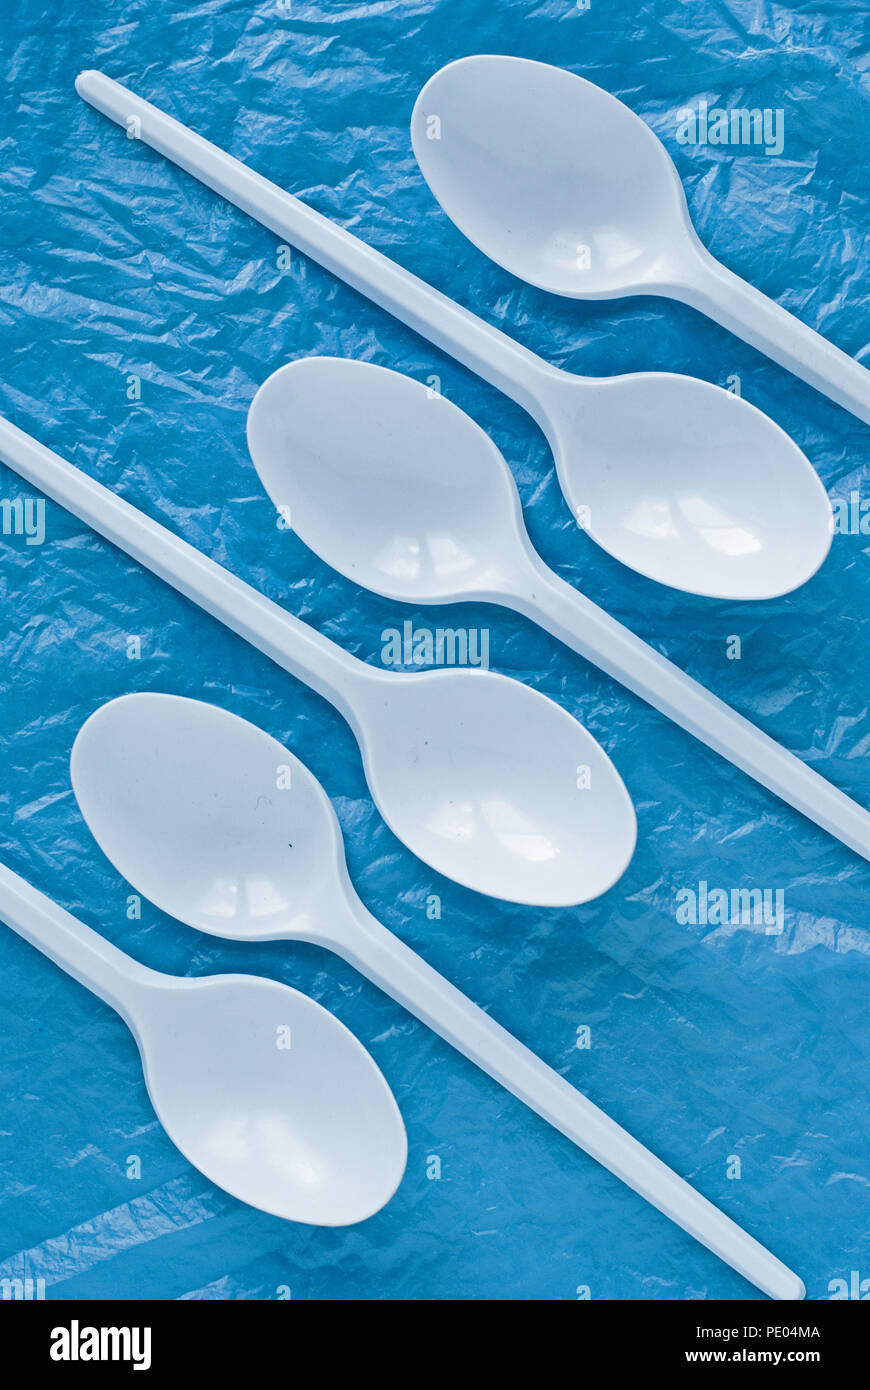 set of white plastic spoons on a blue plastic bag Stock Photo